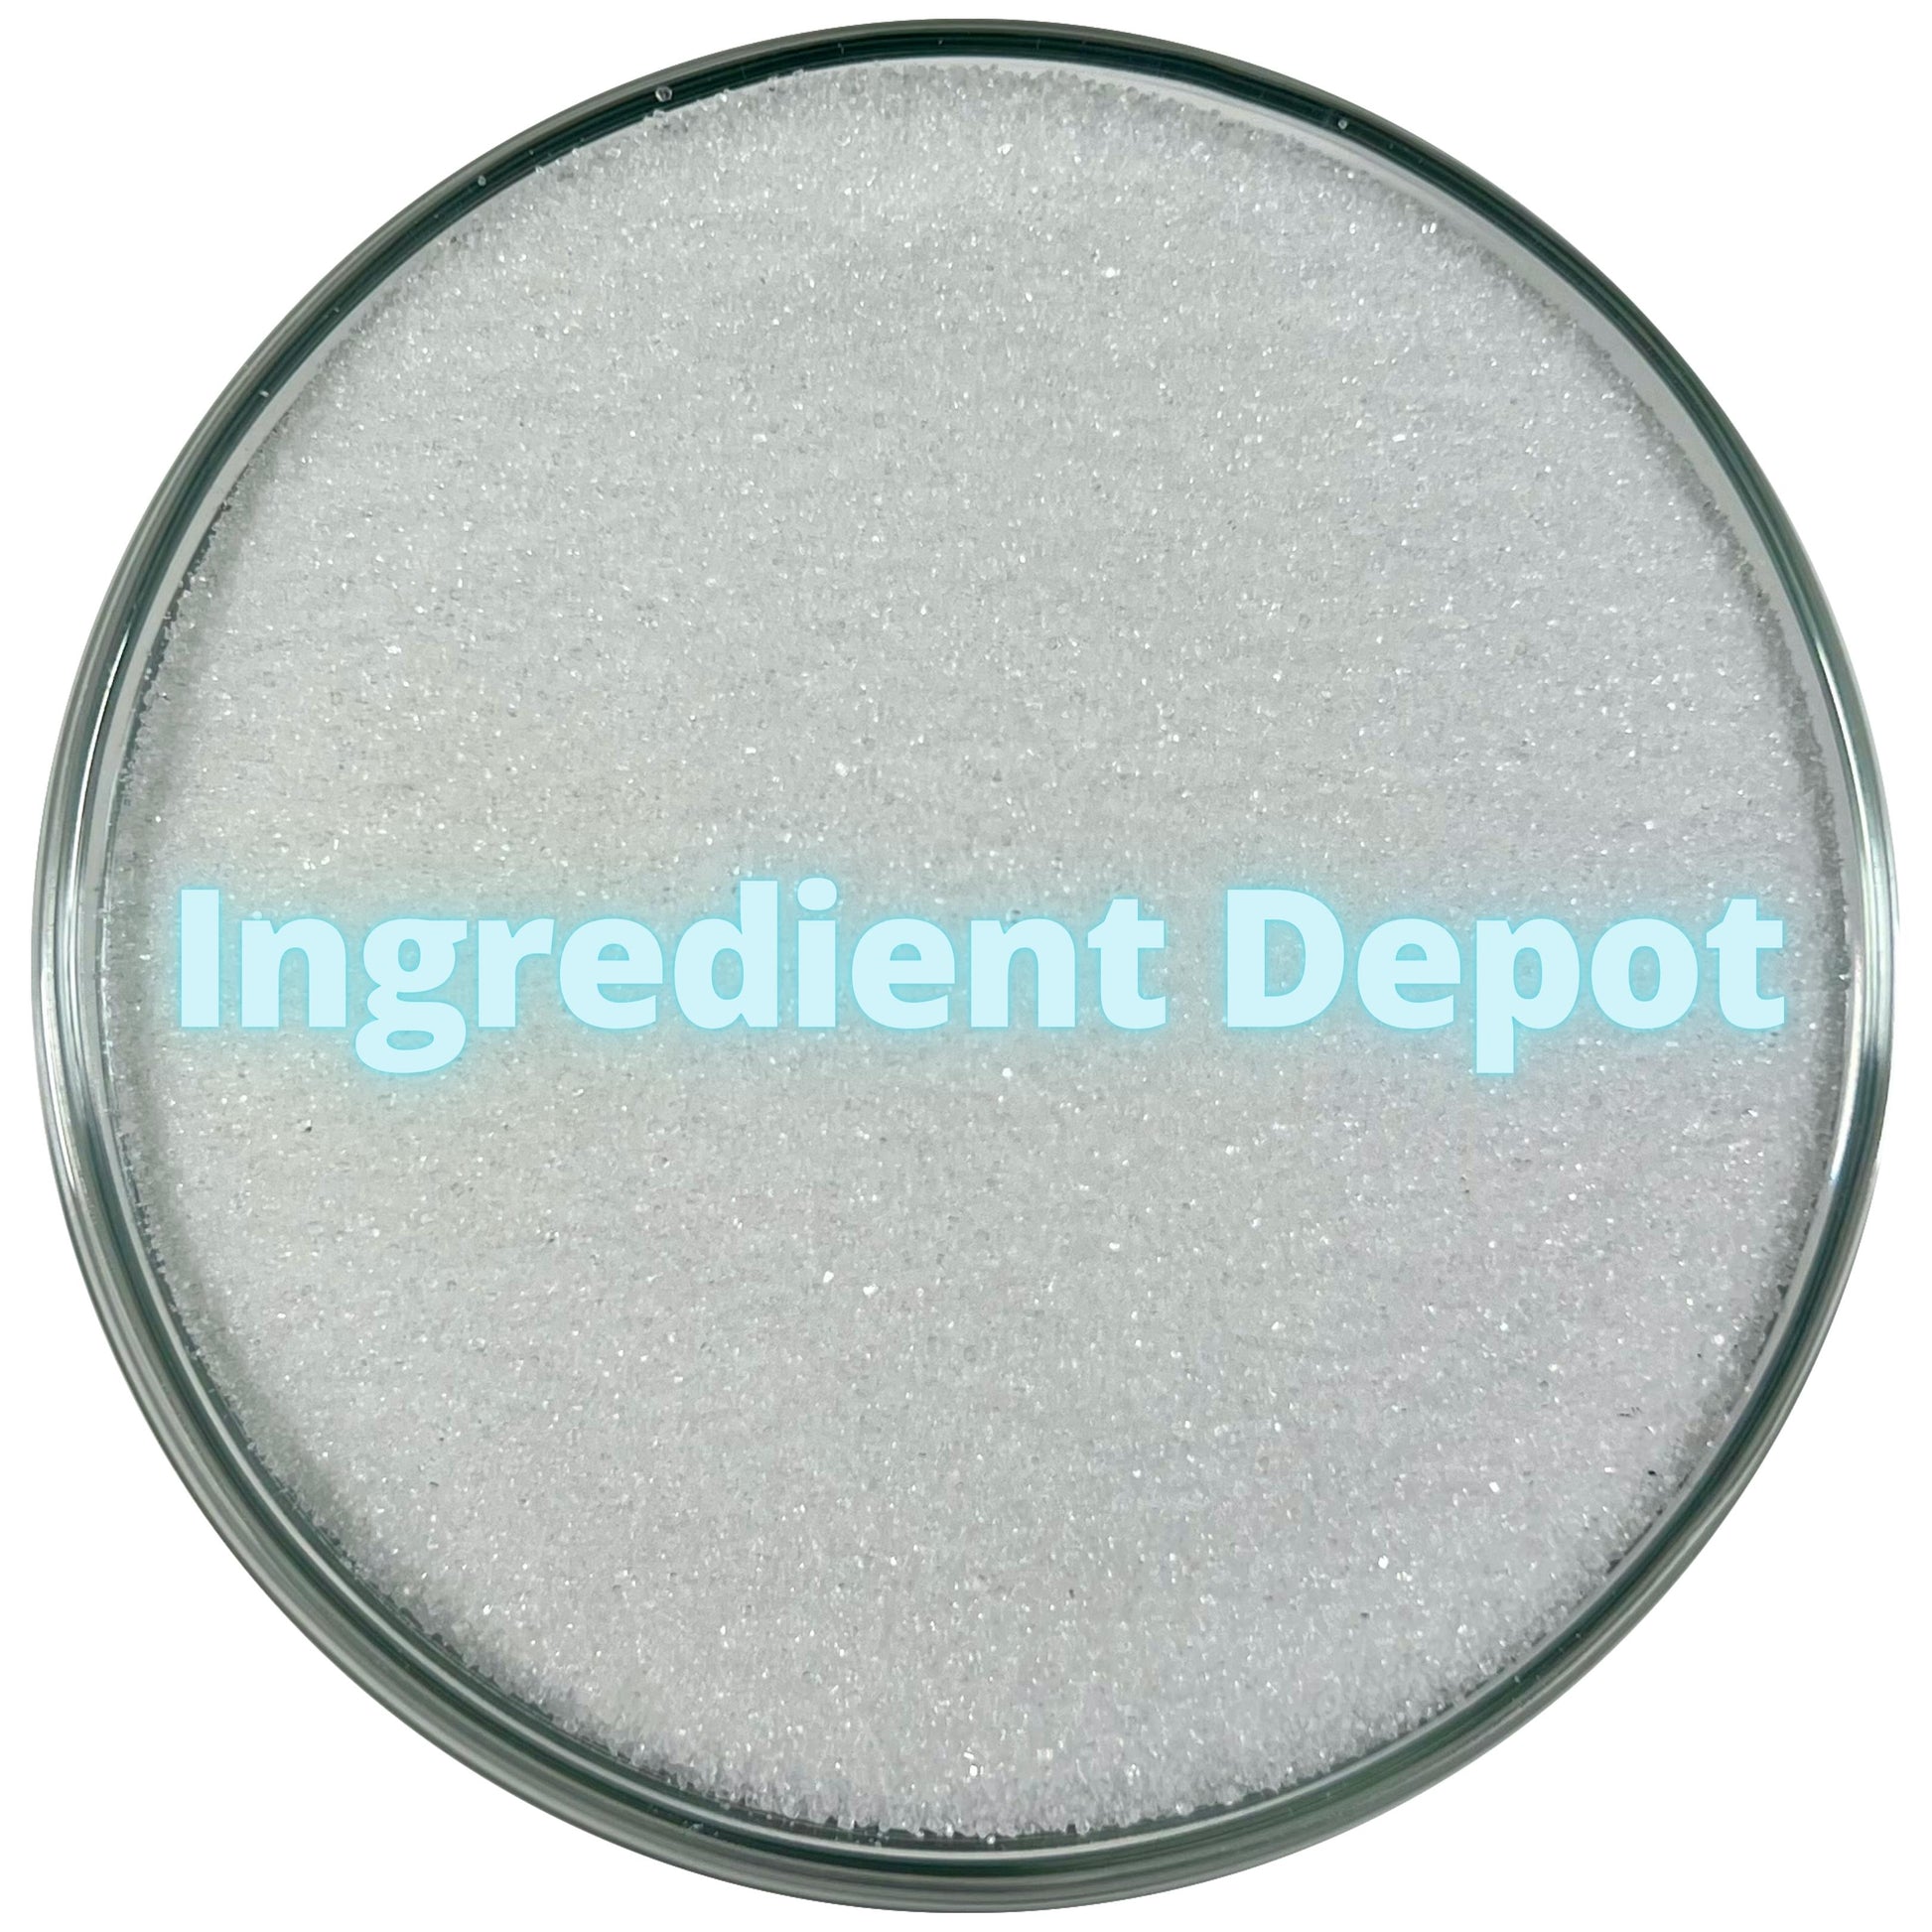 Citric Acid Food and USP Grade (China) 4 kgs - IngredientDepot.com